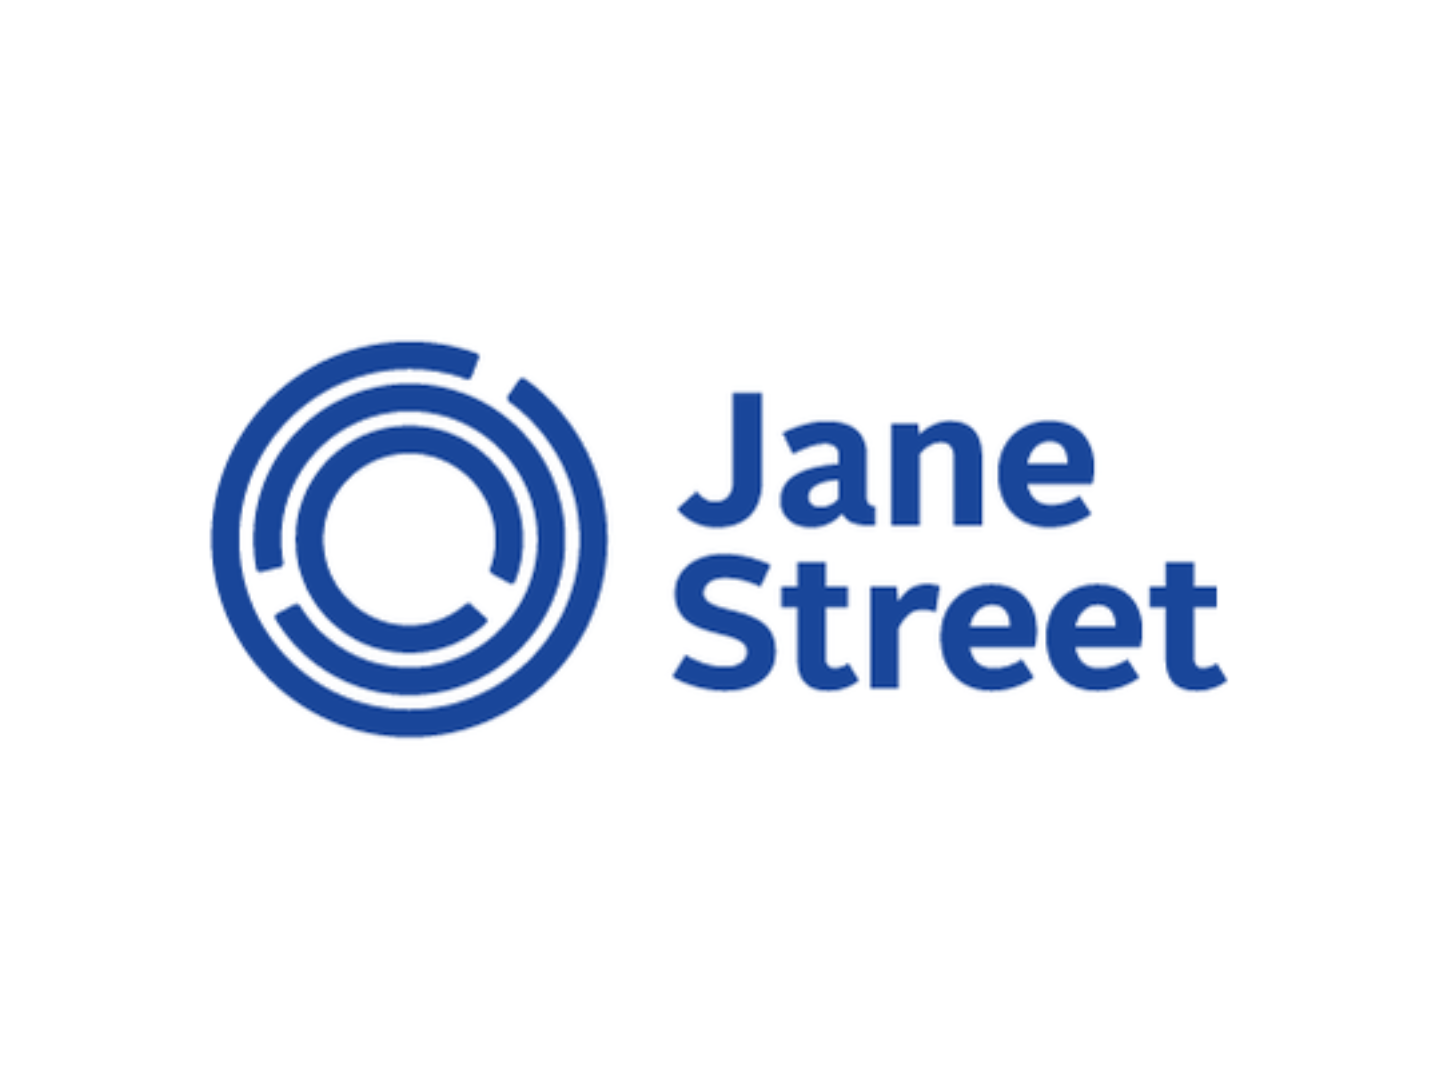 Jane Street Logo